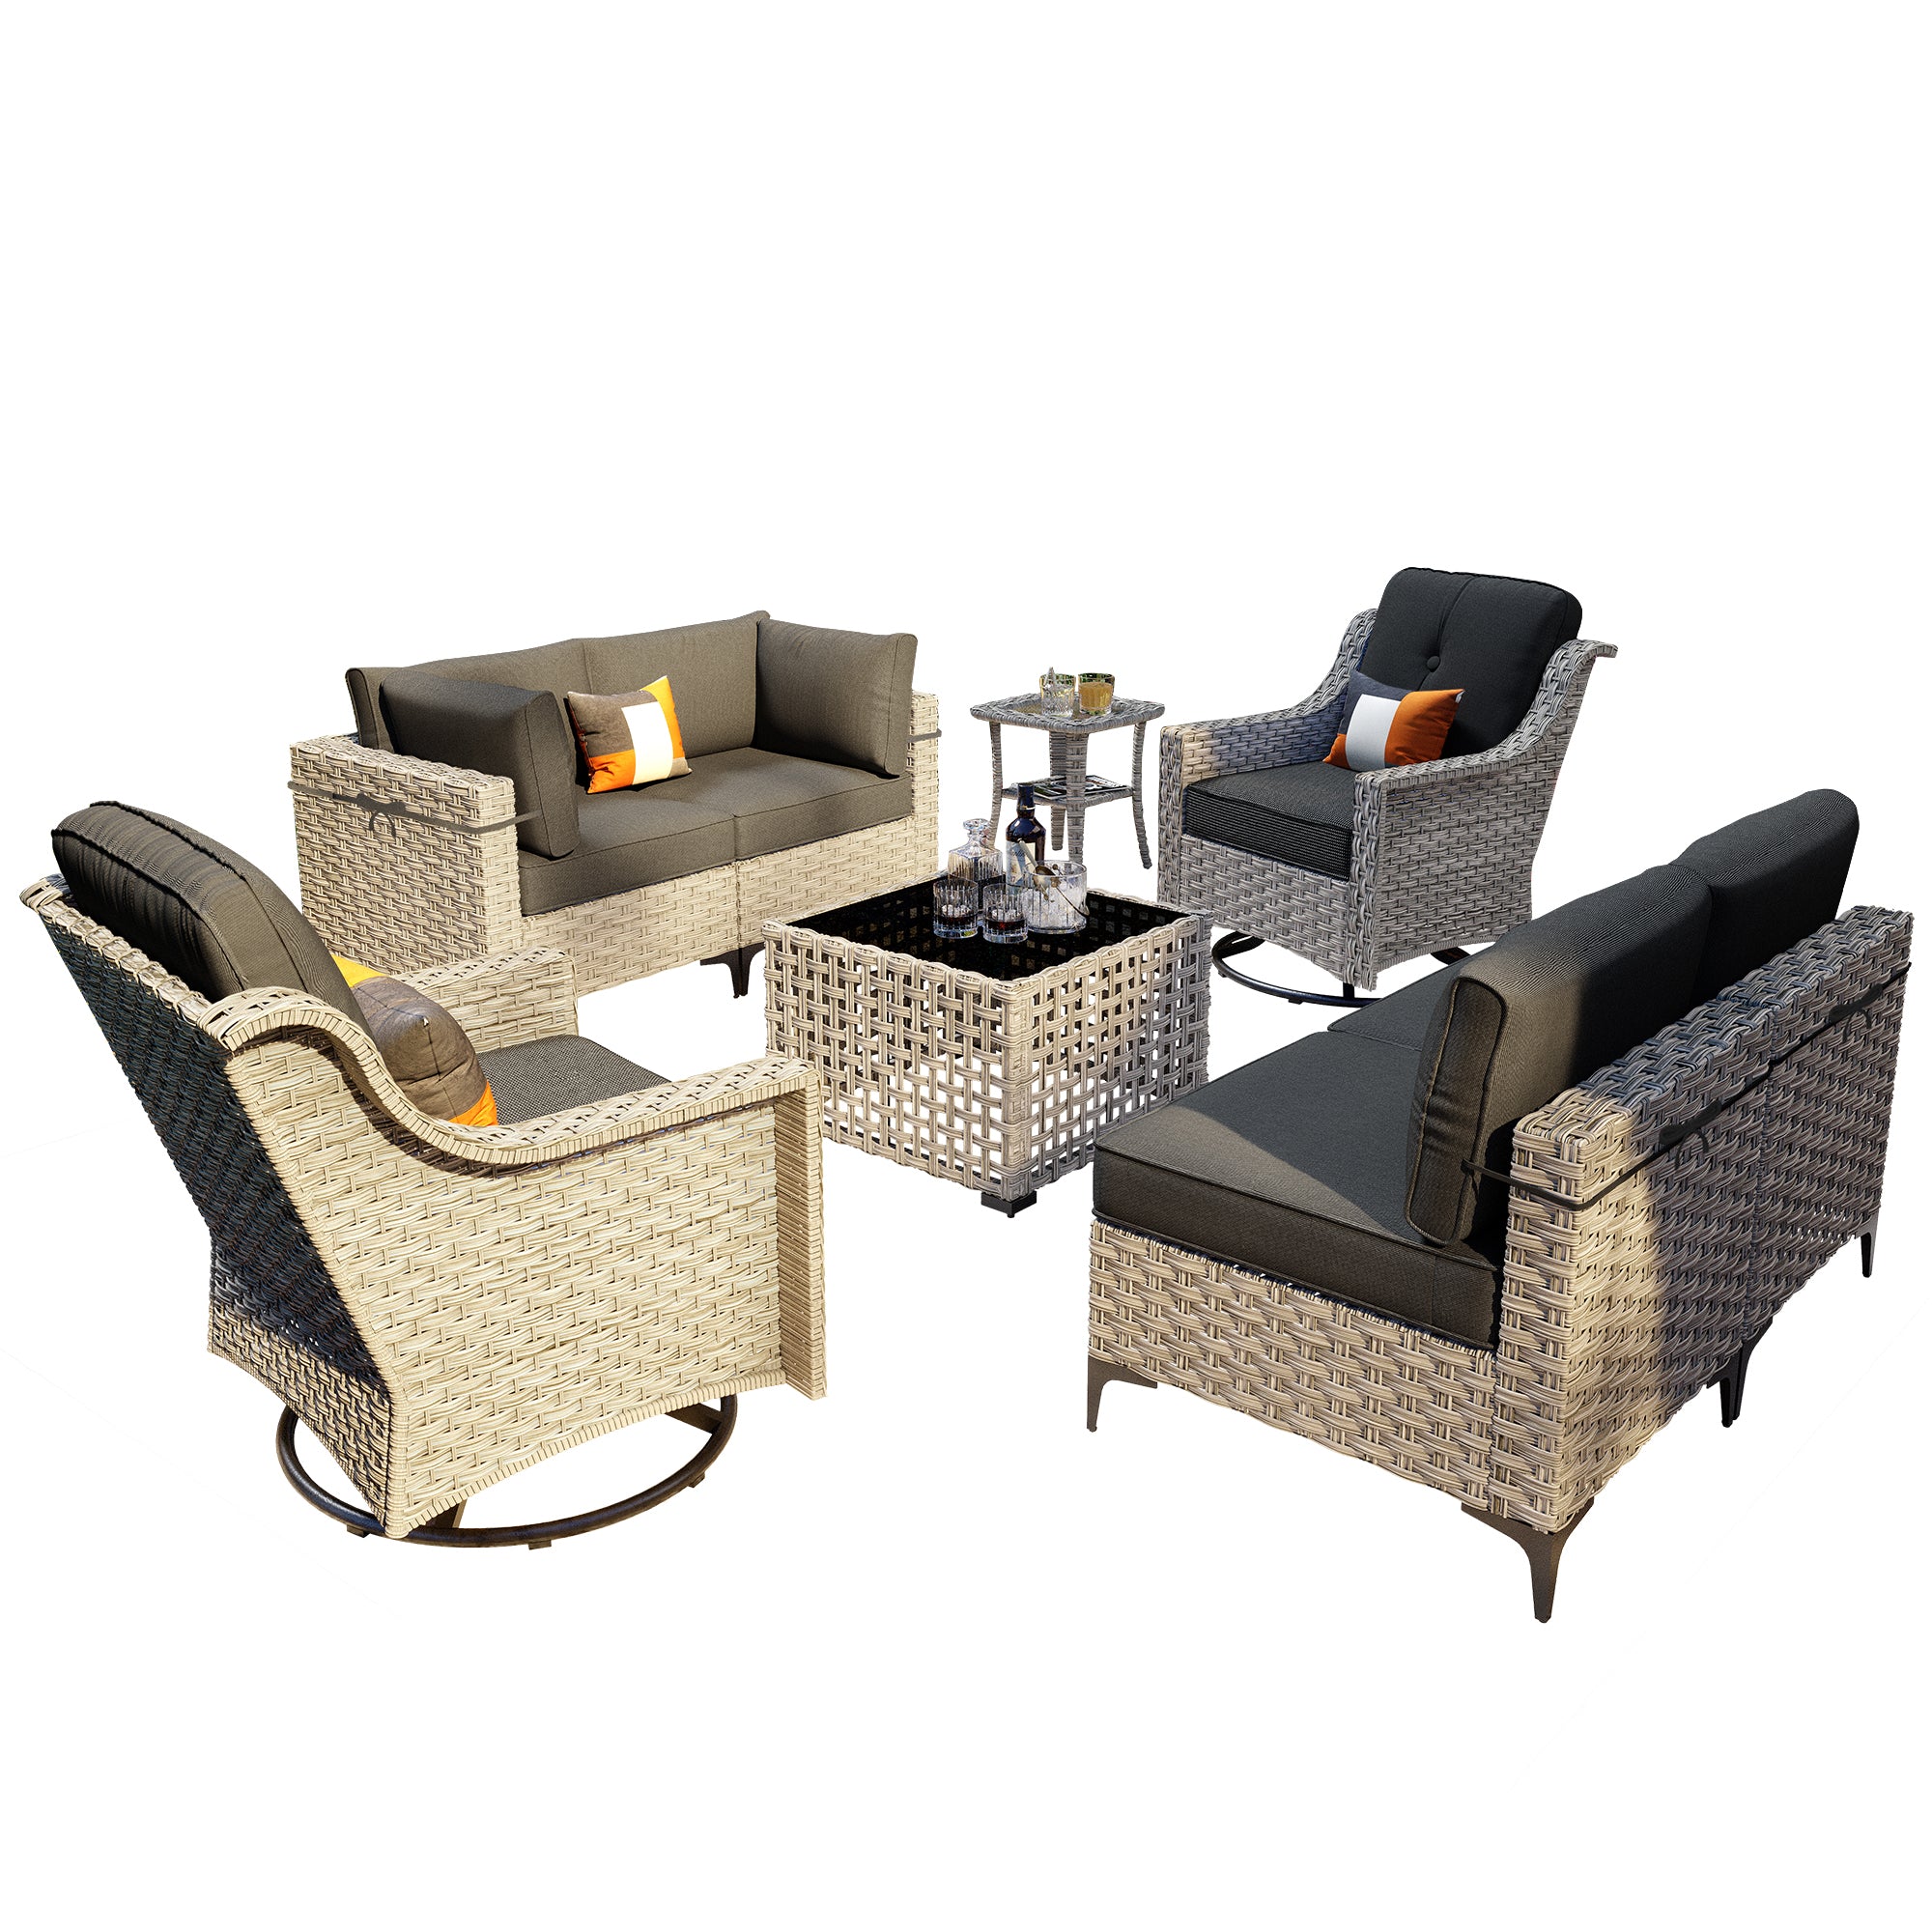 SKT Serie - Sectional Outdoor Furniture Set 8-Piece